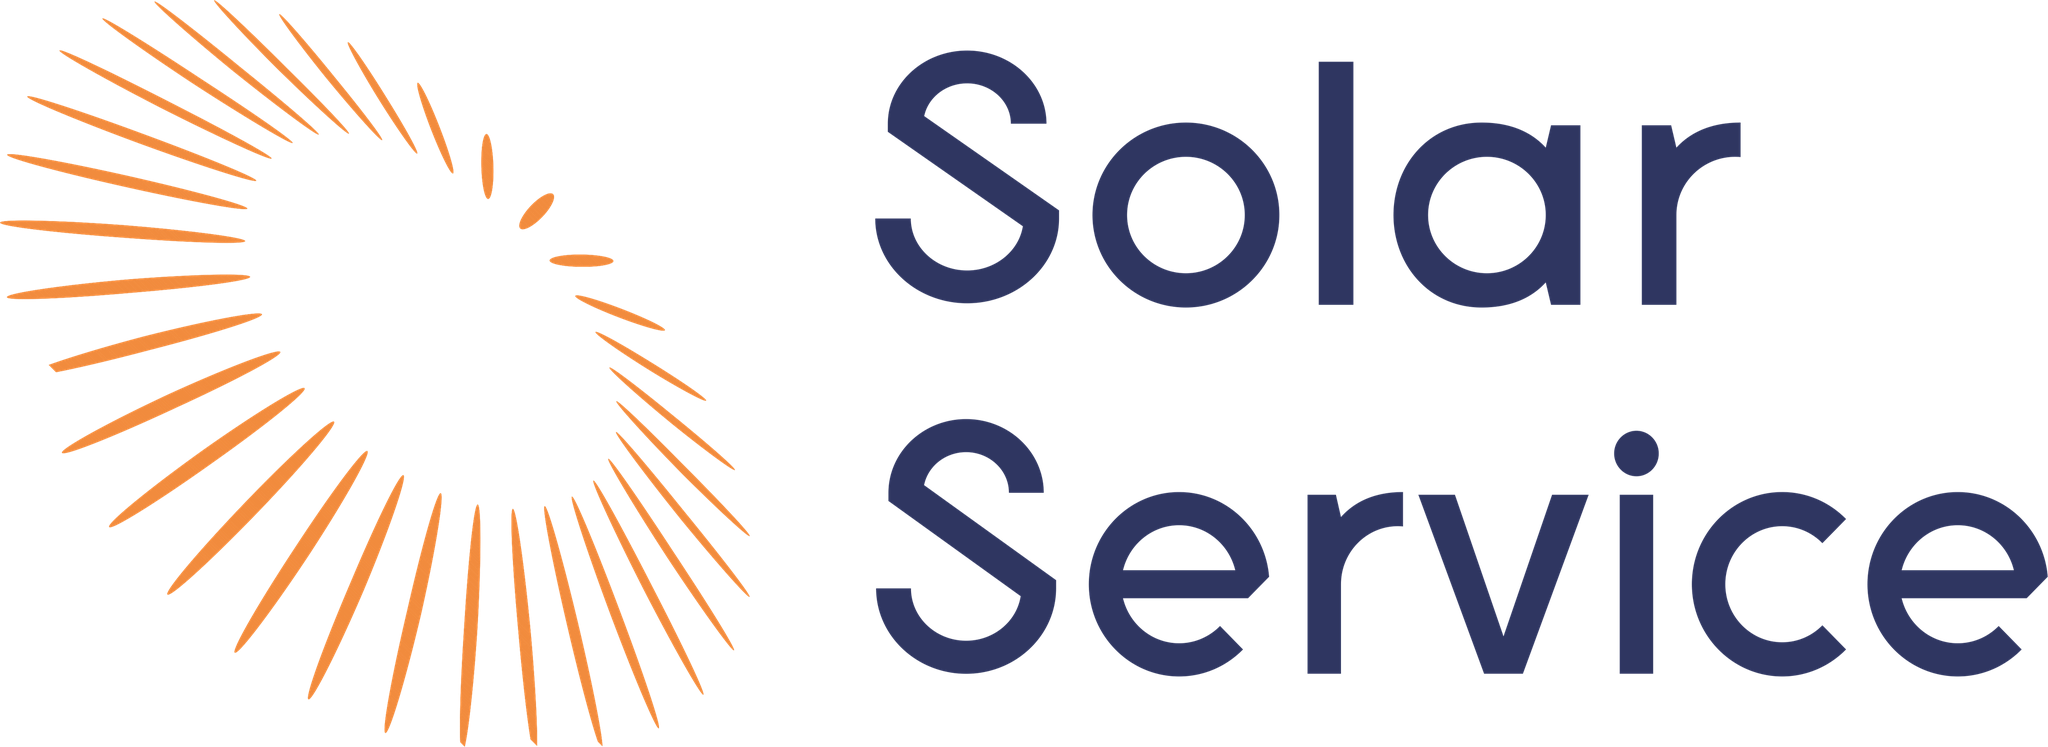 Solar service